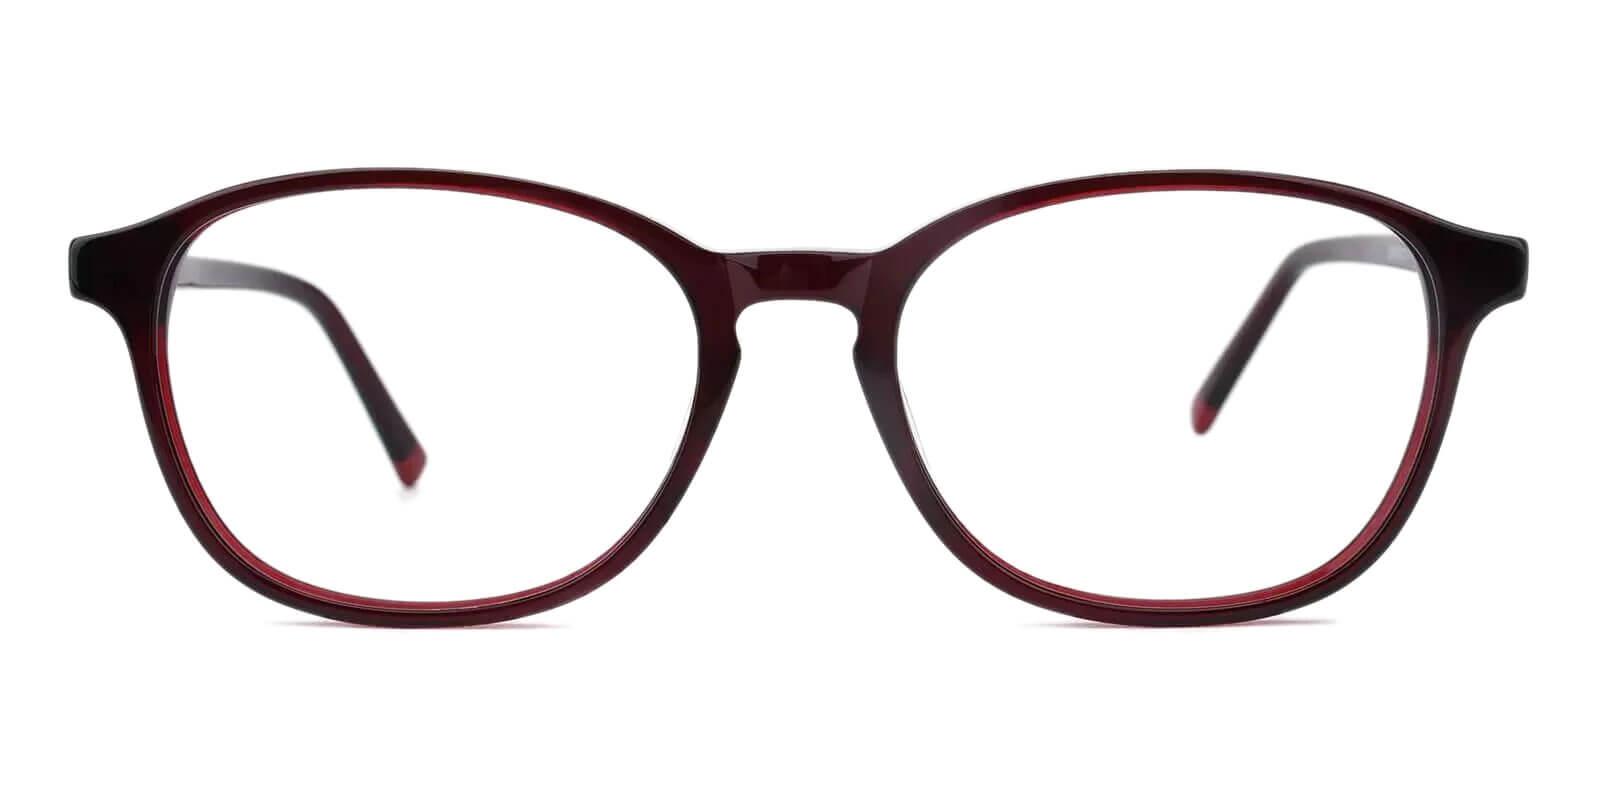 Brunei Brown Acetate Eyeglasses , SpringHinges , UniversalBridgeFit Frames from ABBE Glasses